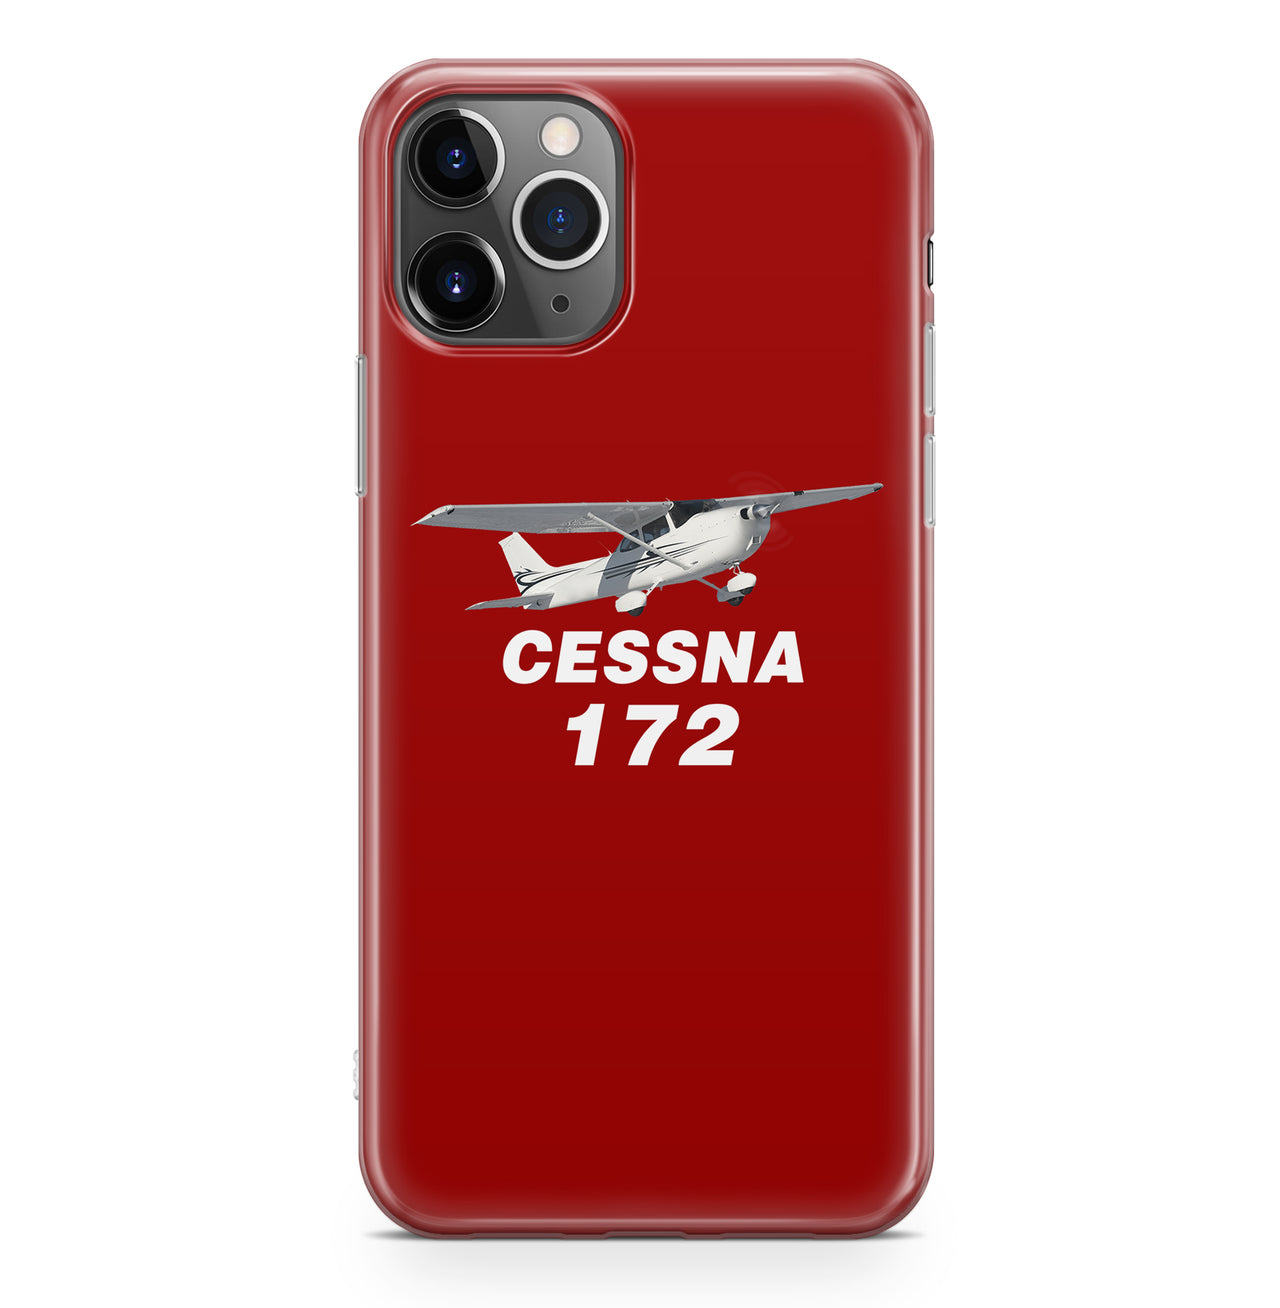 The Cessna 172 Designed iPhone Cases